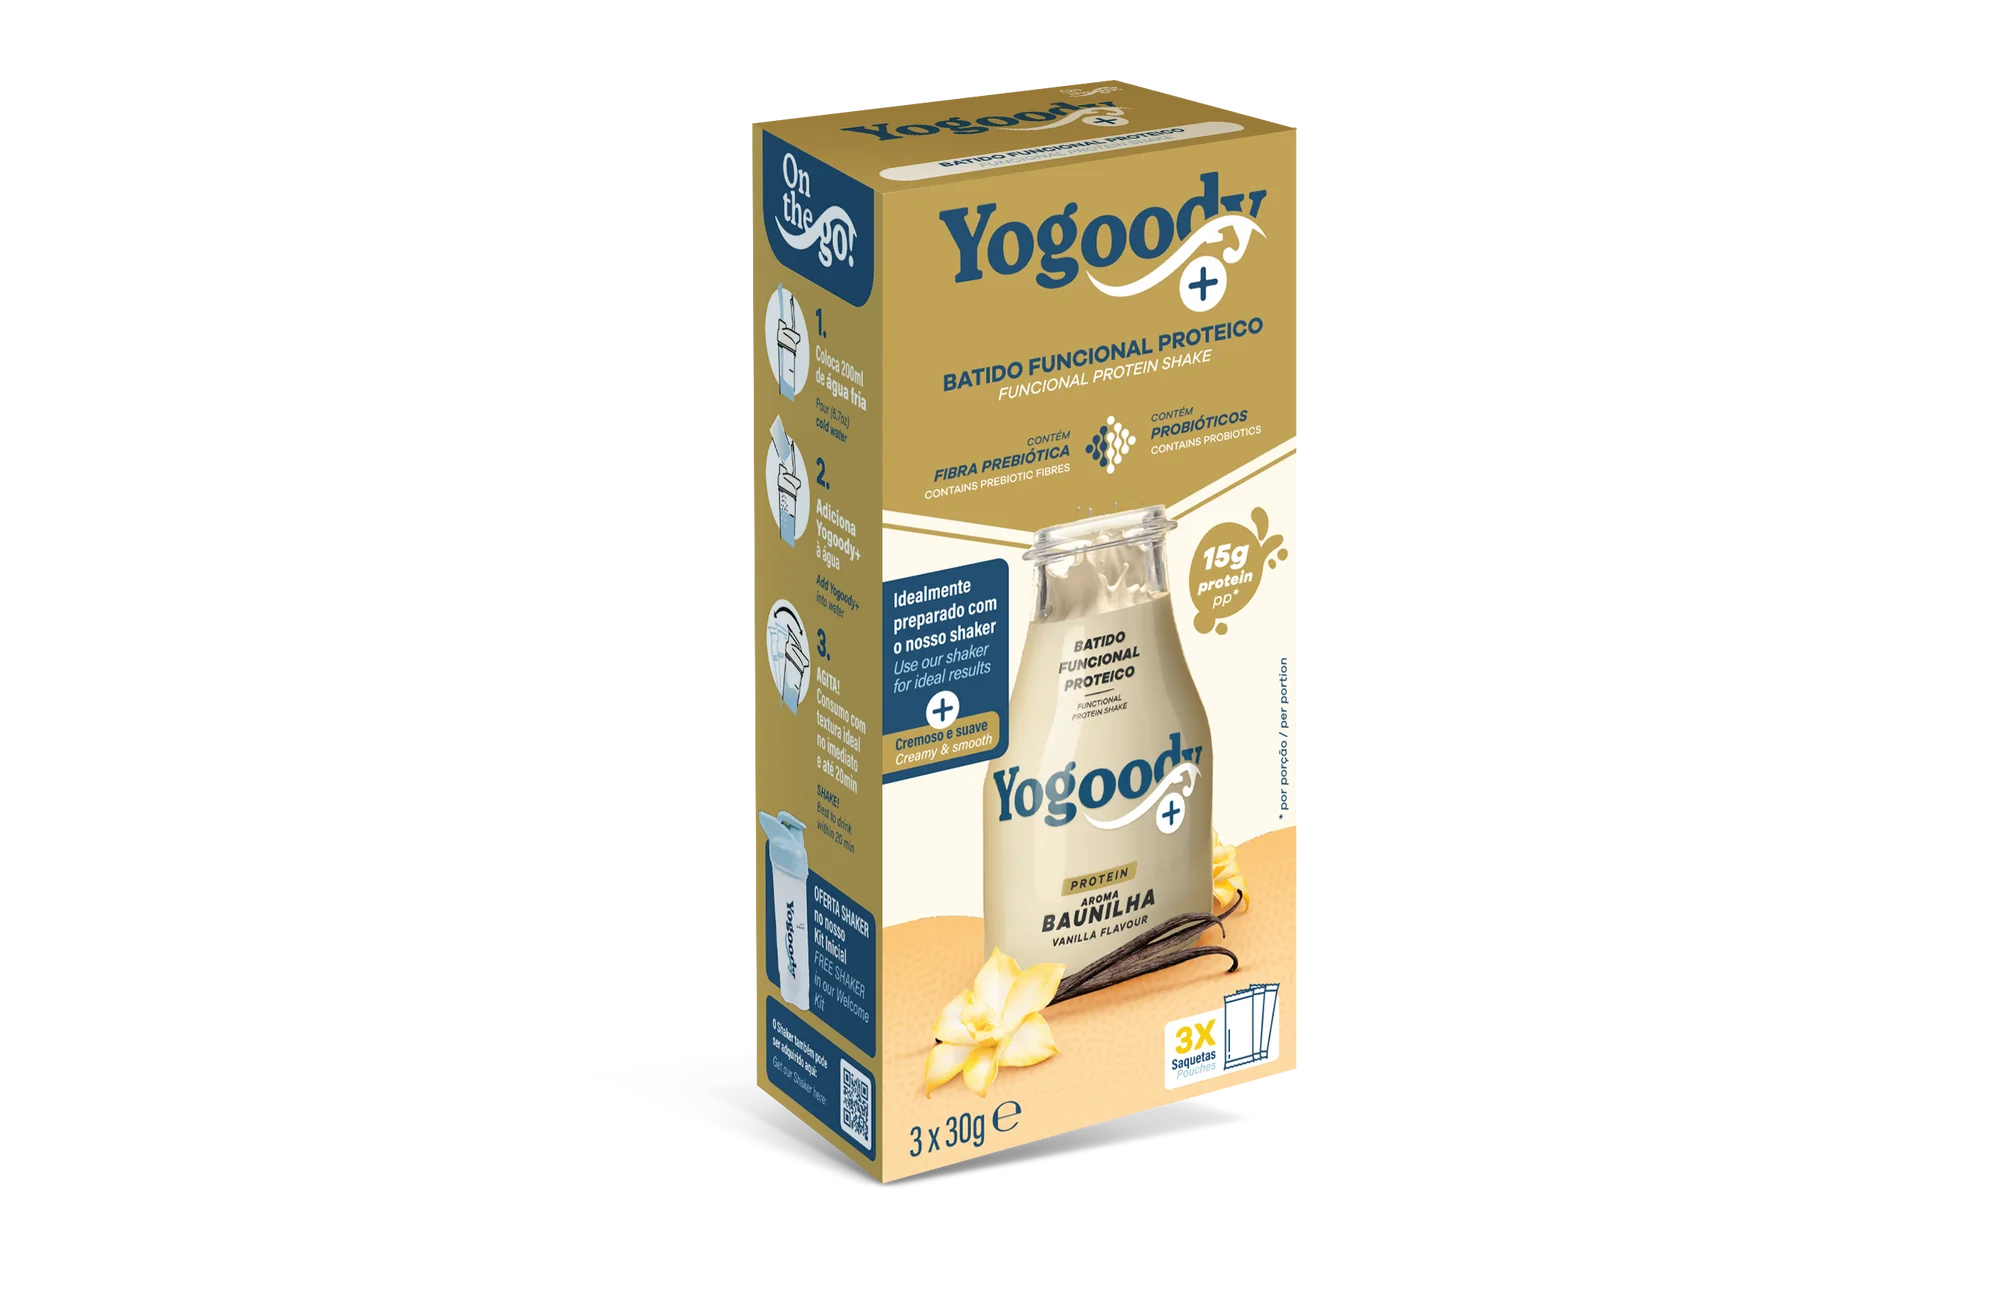 Yogoody+ Protein Vanilla Flavoured Shake - 3 x 30g sachets